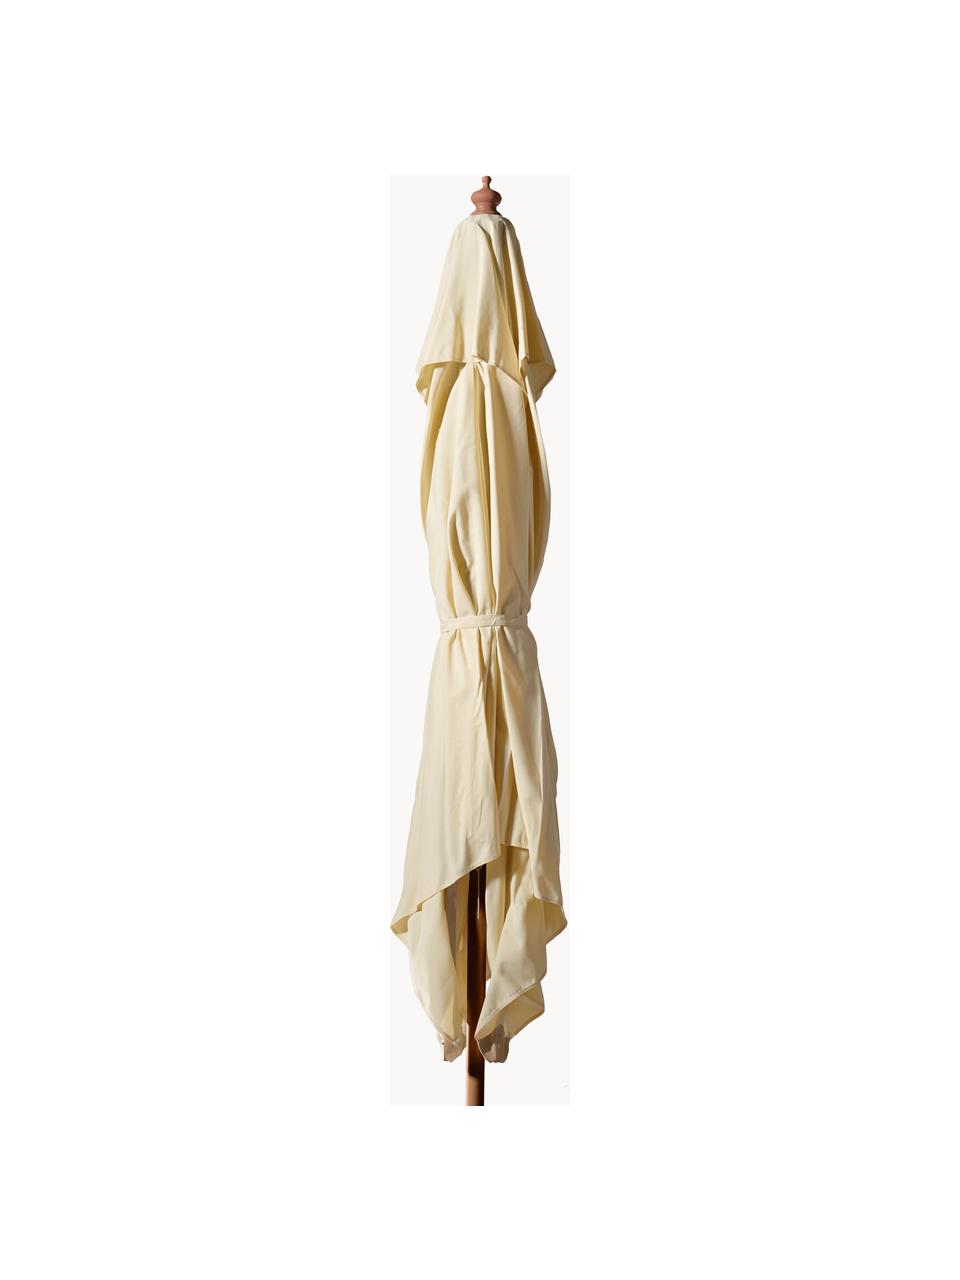 Sombrilla Lizzano, Ø 400 cm, Estructura: madera de eucalipto, Blanco crema, Ø 400 x Al 265 cm